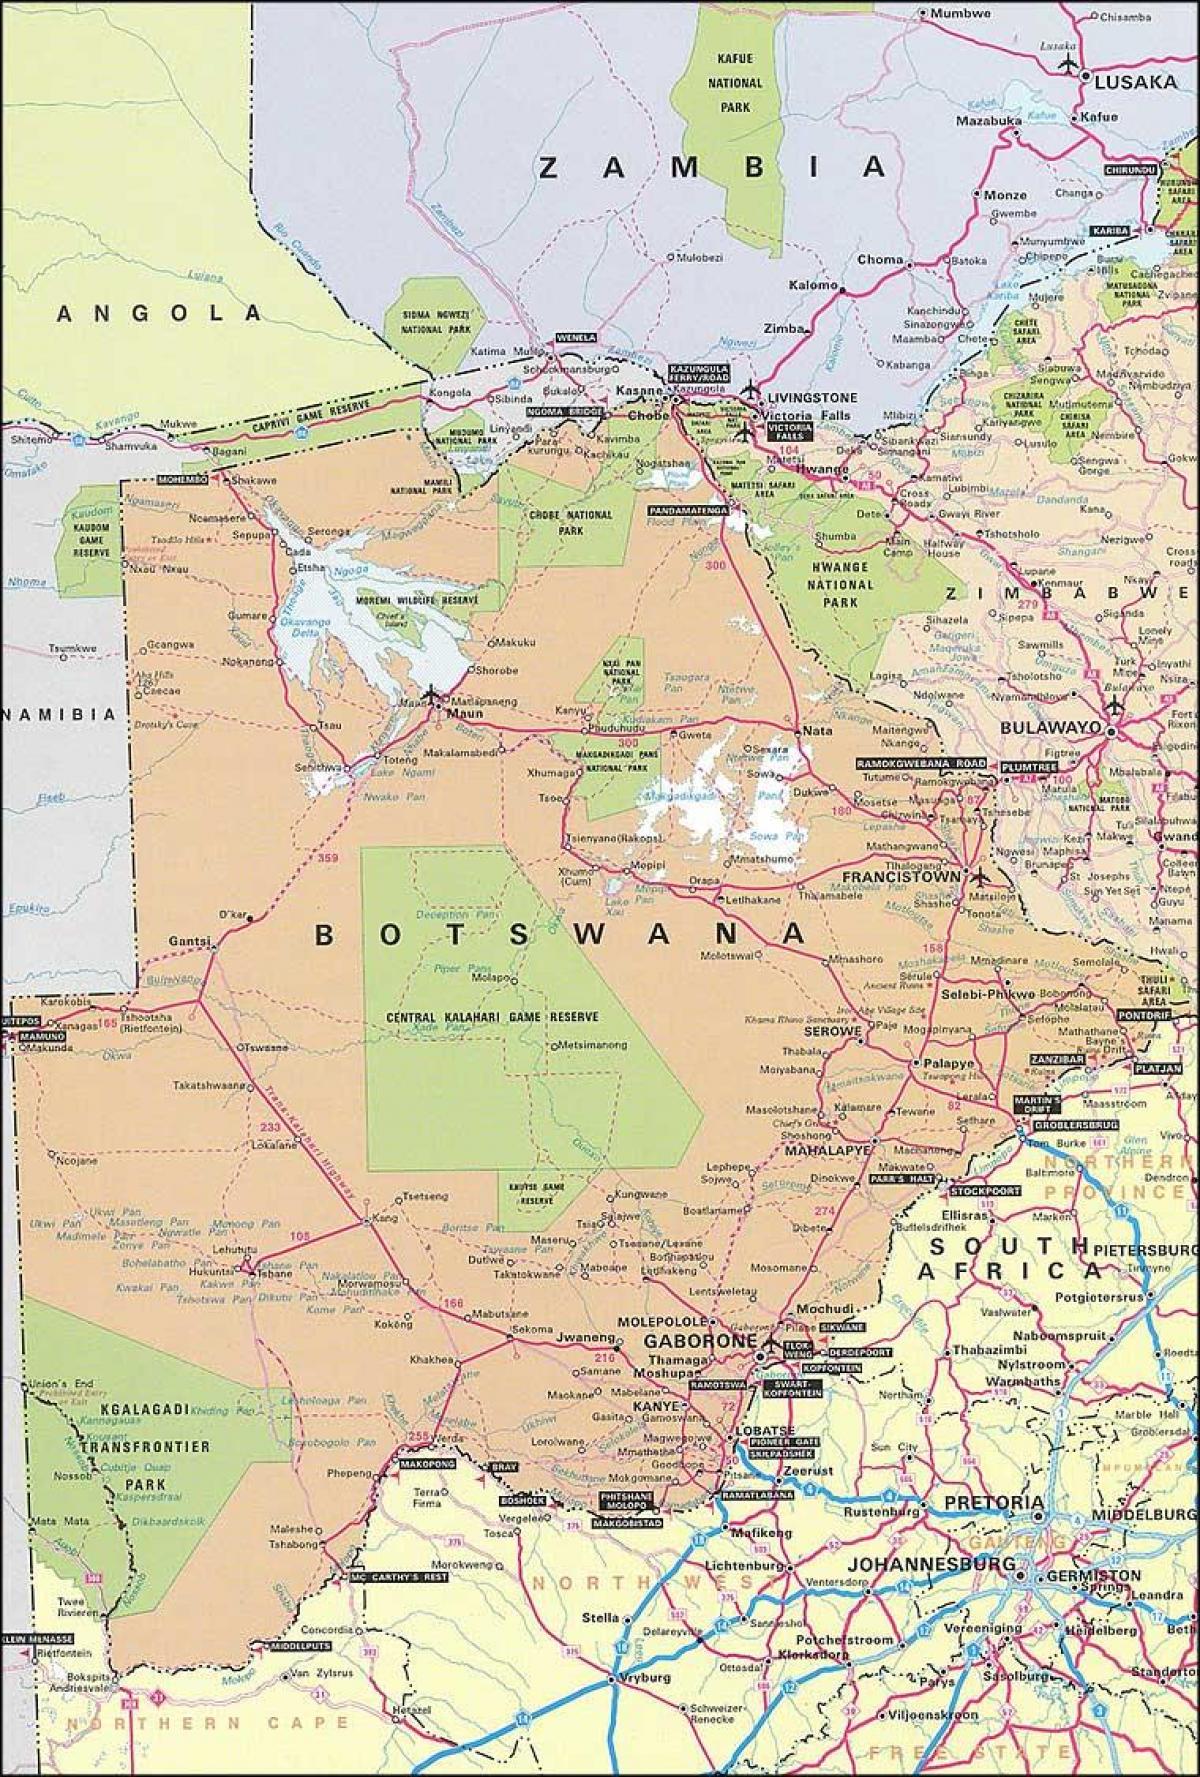 rutiere hartă din Botswana